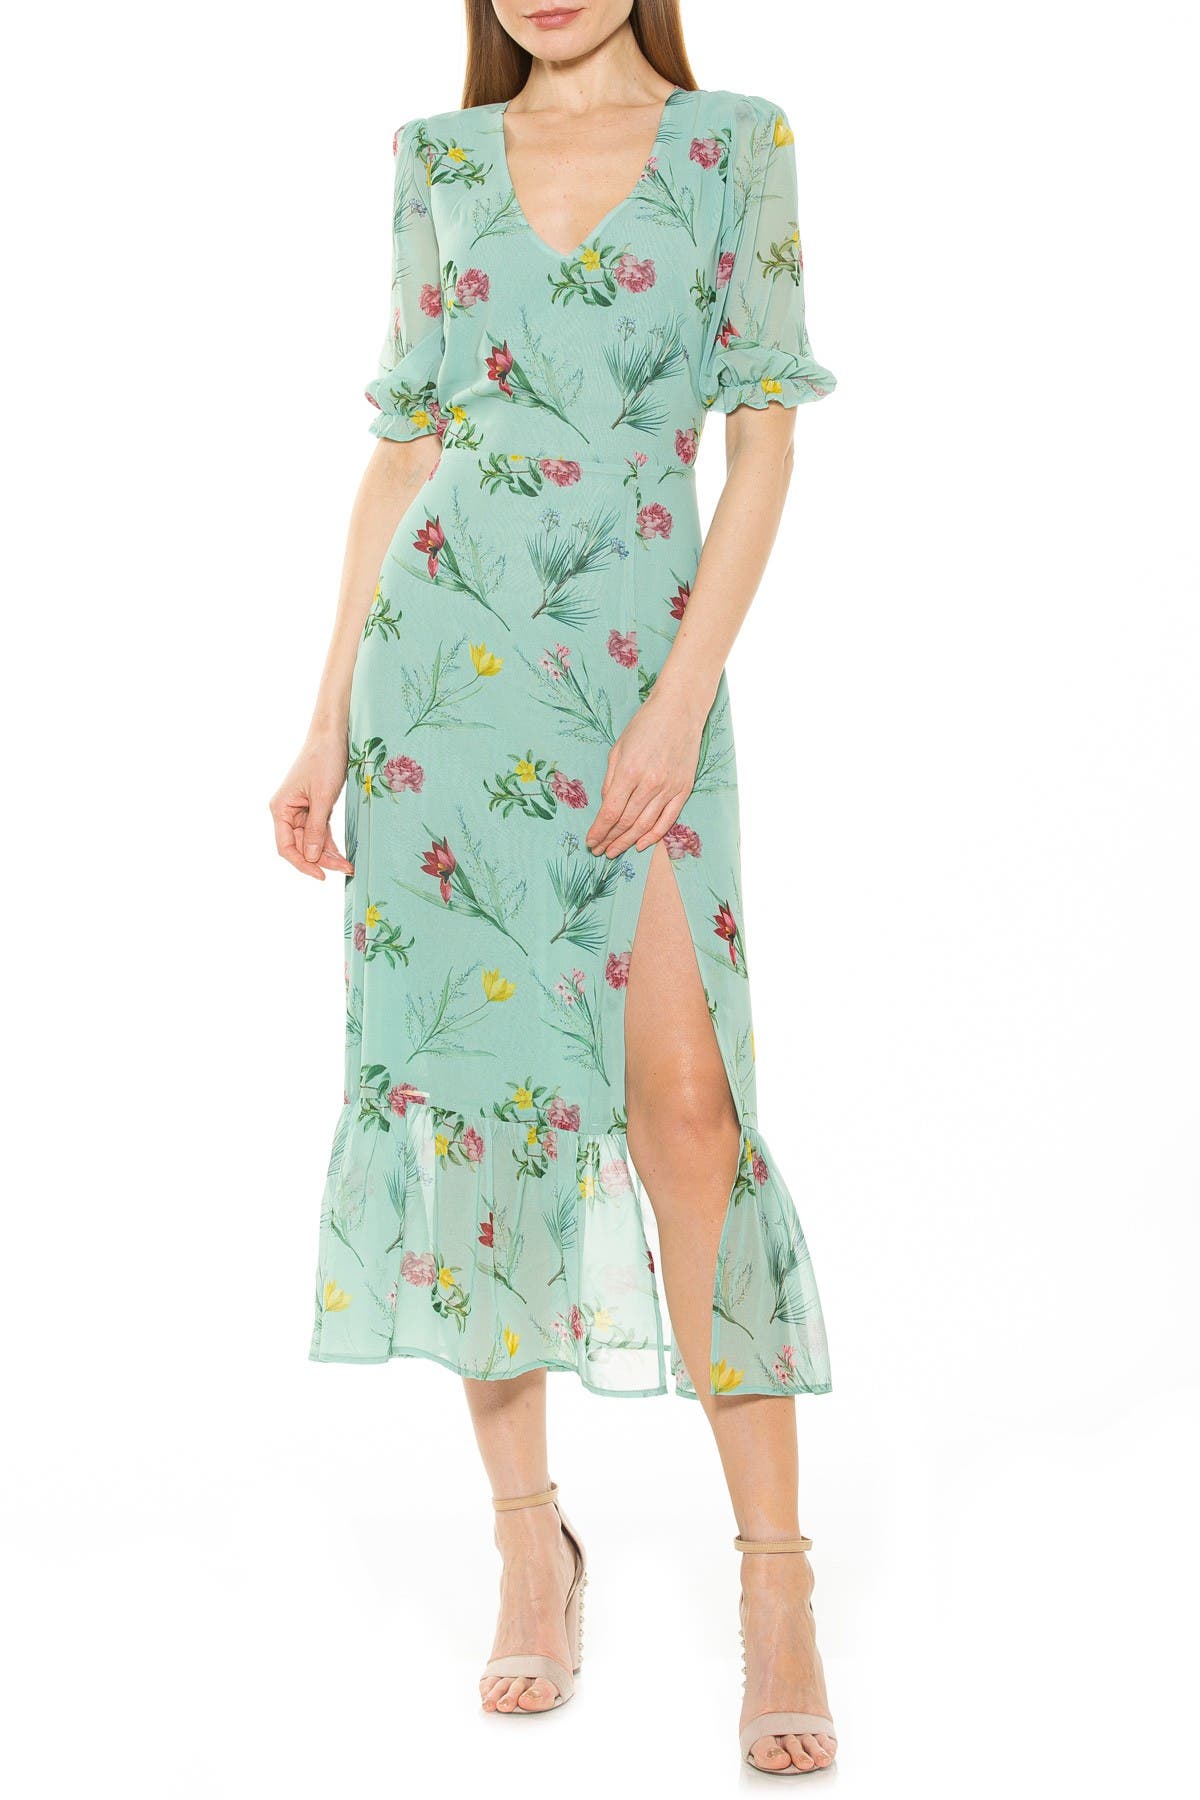 Alexia Admor Tinsley V-neck Side Slit Ruffle Dress In Mint Floral